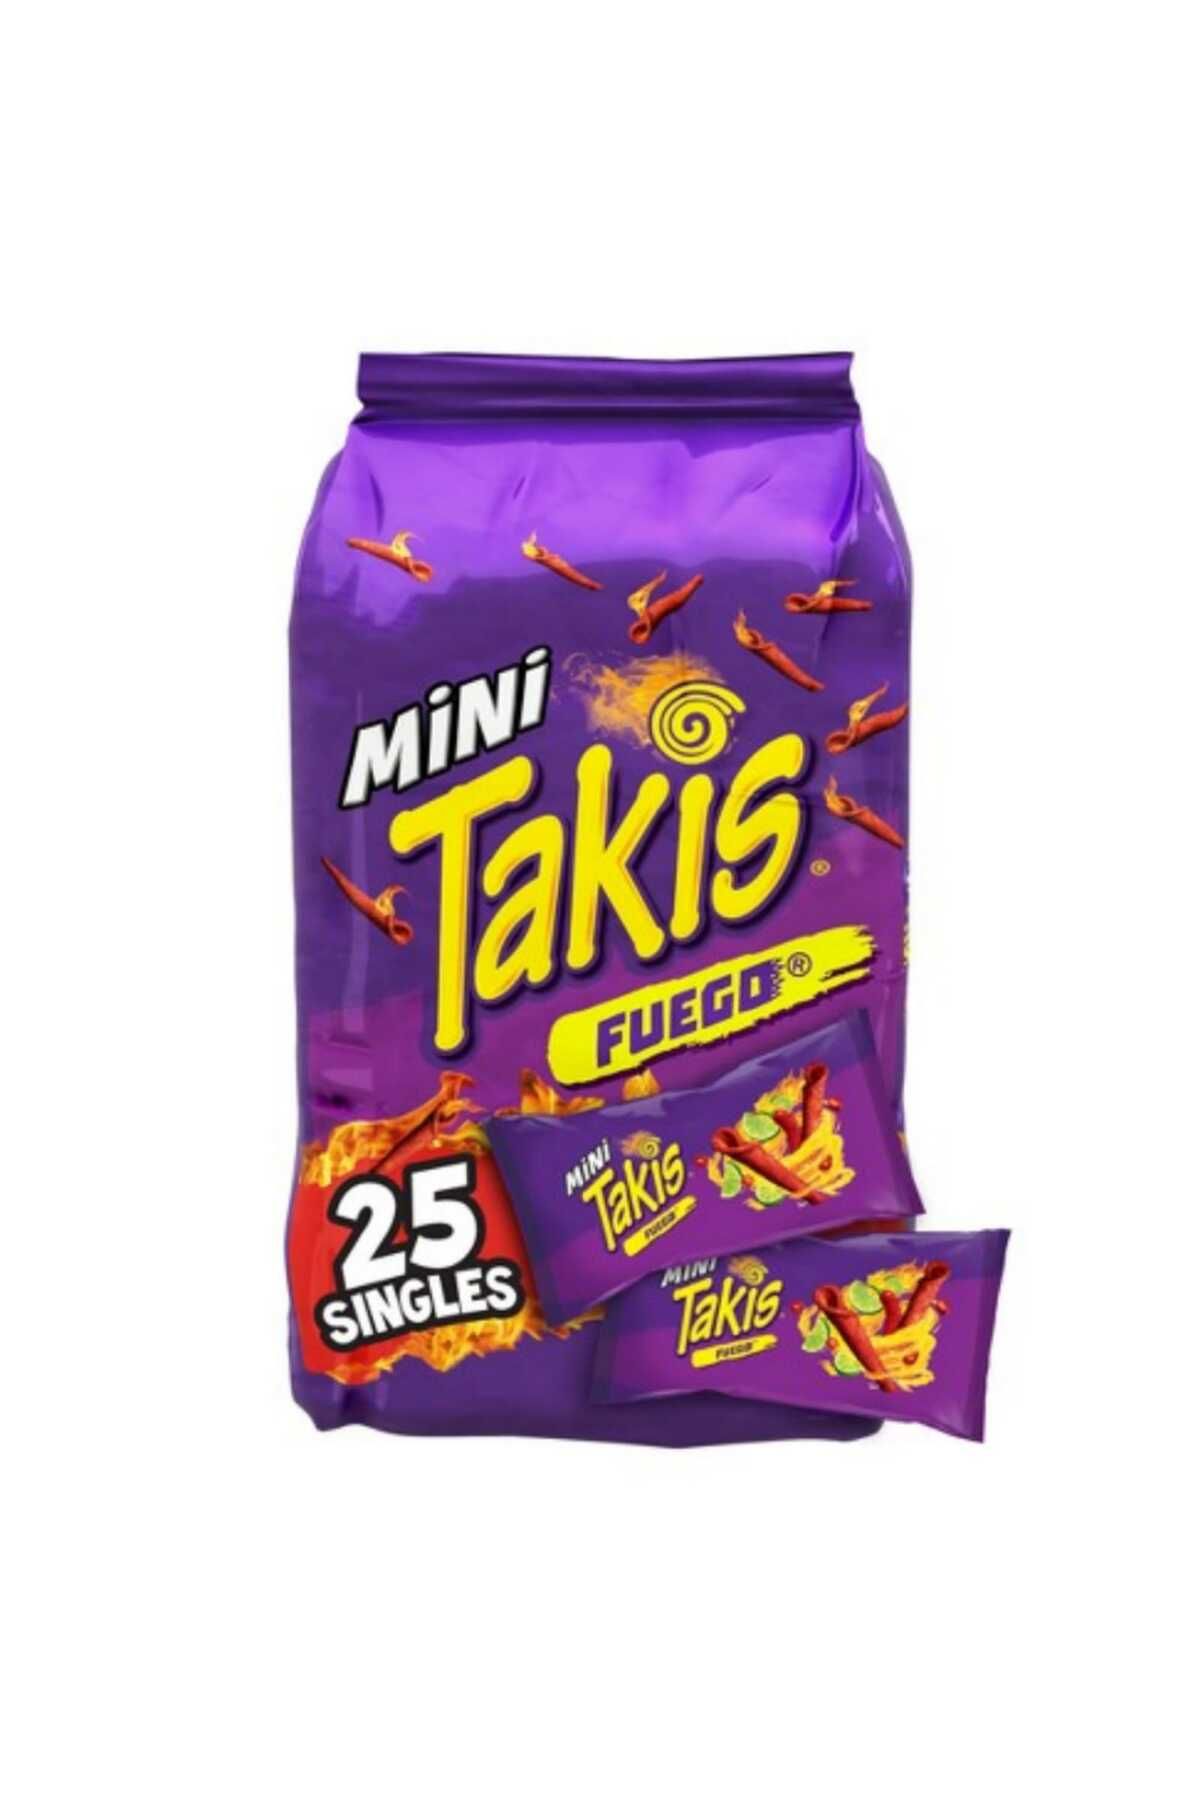 Takis Mini Chips Fuego 25 Singles Bite Size 875gr